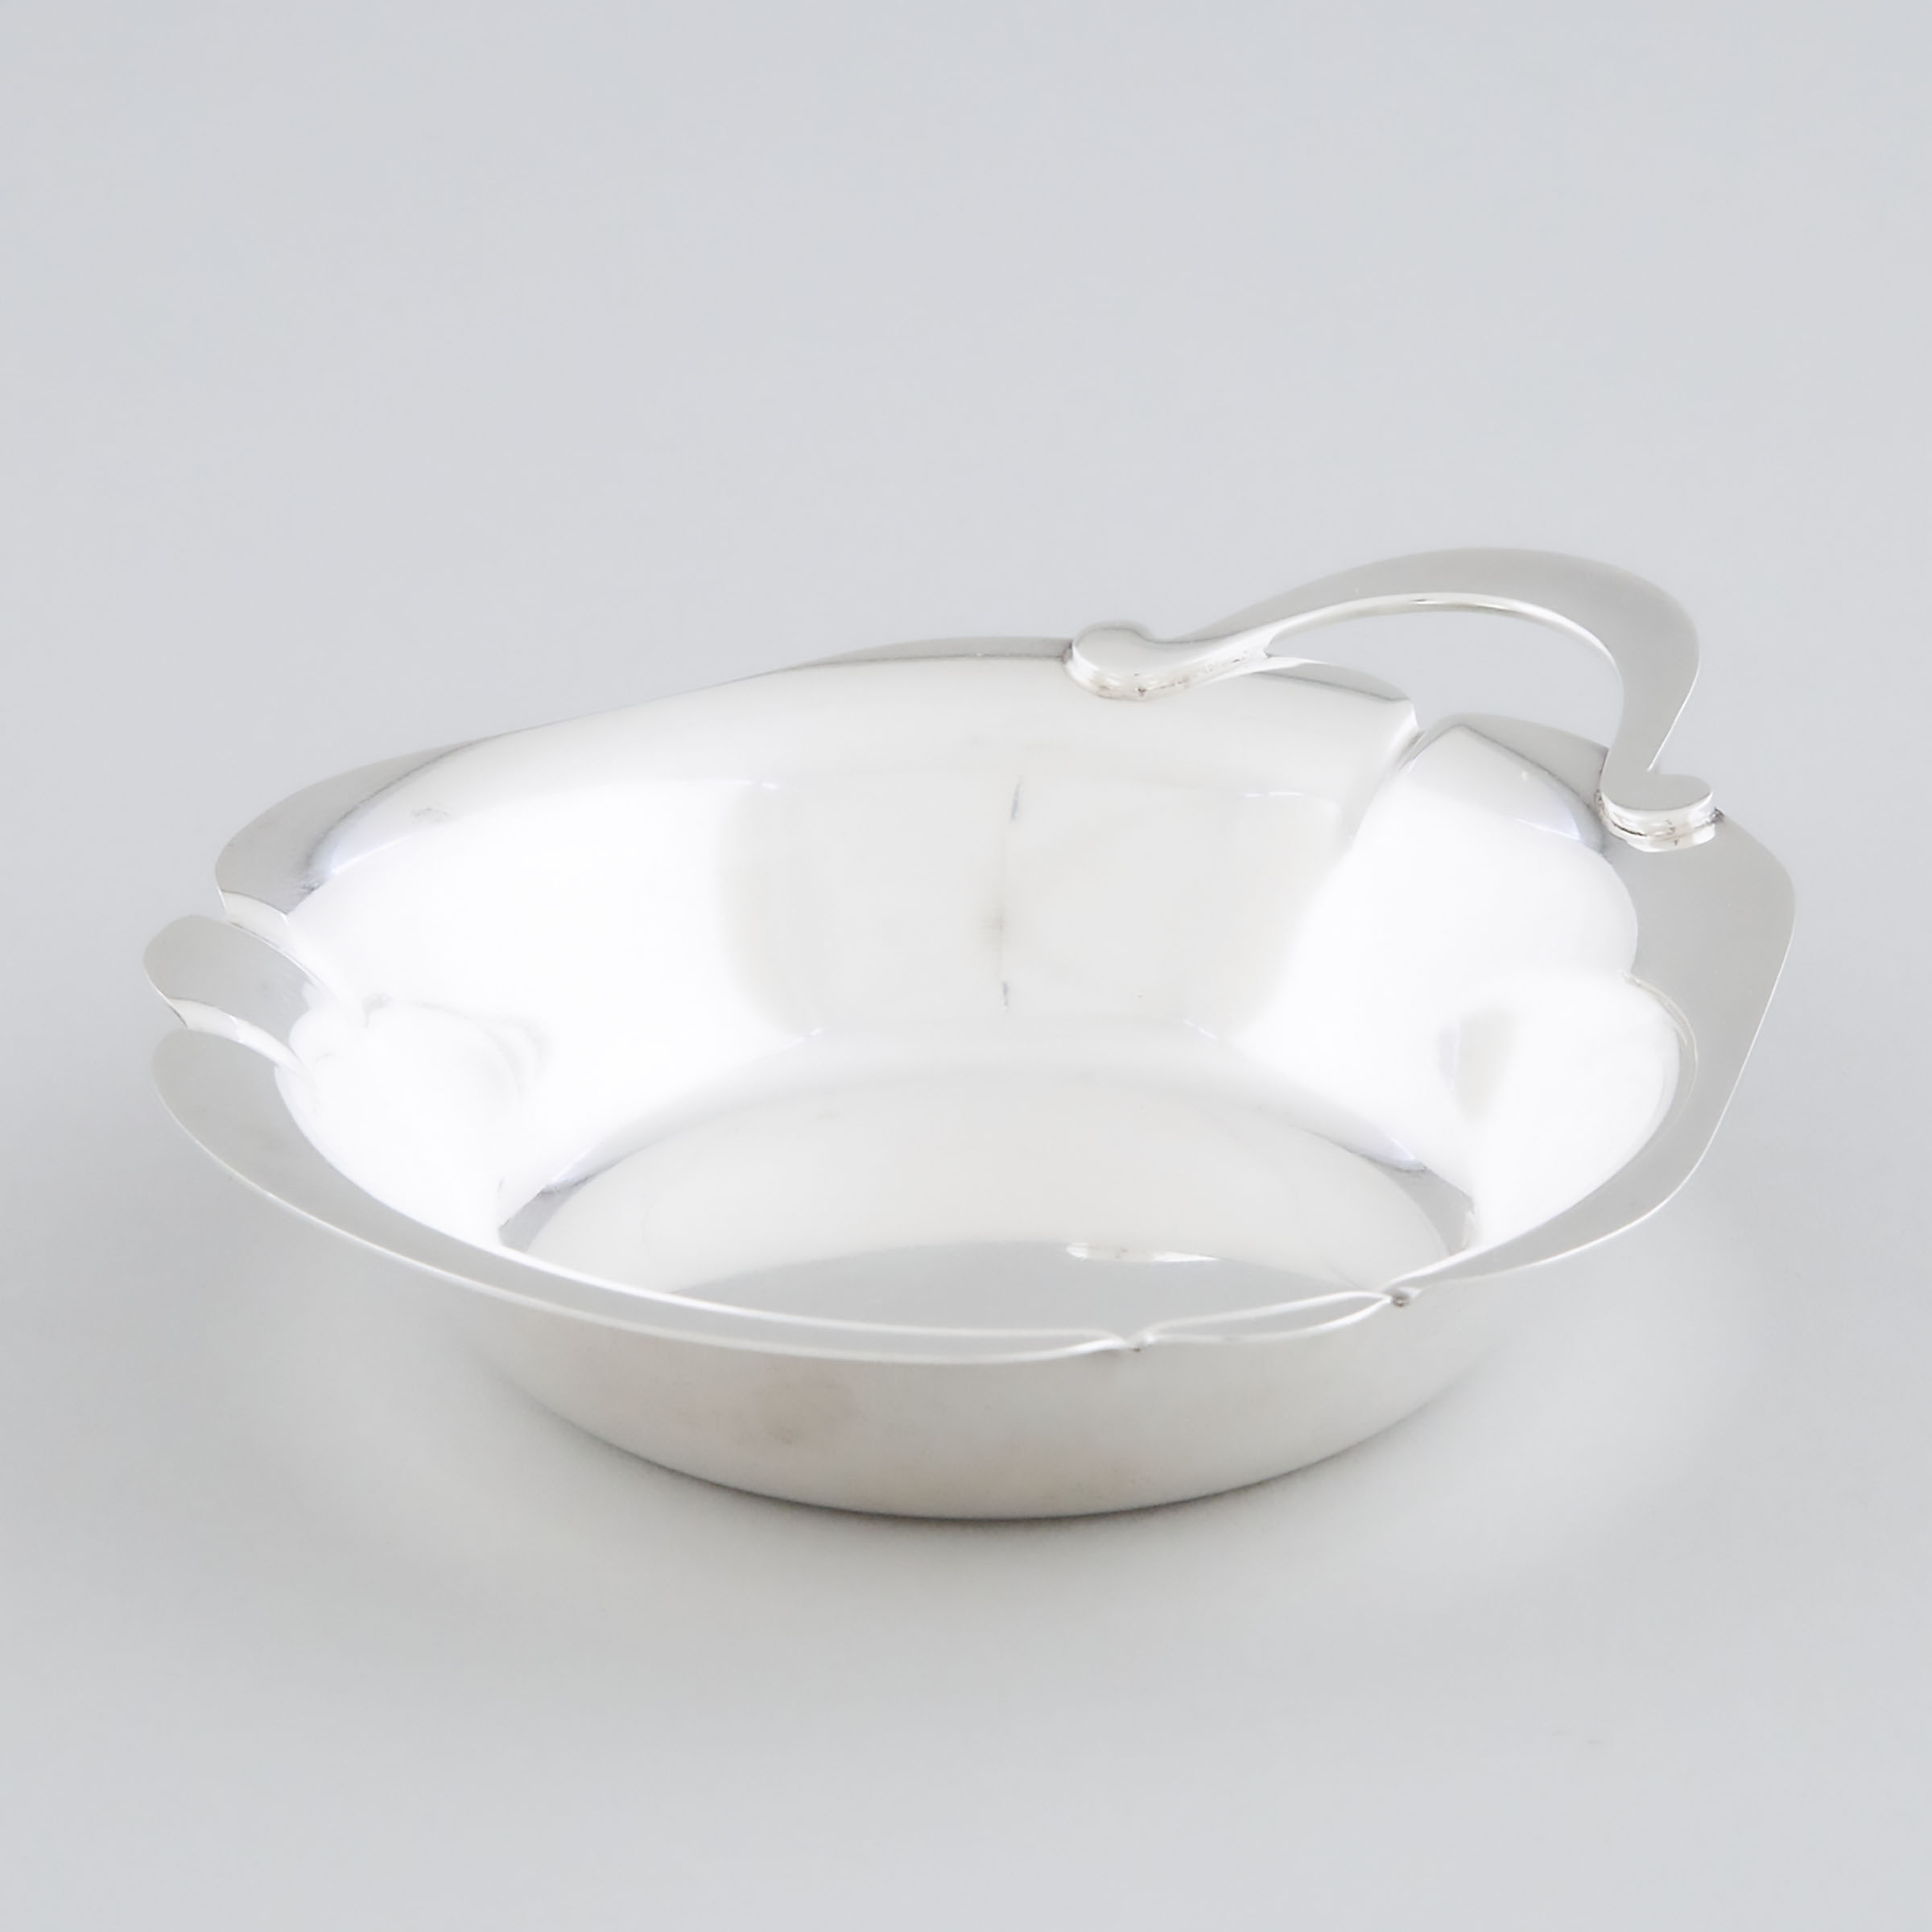 American Silver Shaped Dish, Richard Dimes Co., South Boston, Mass., 20th century